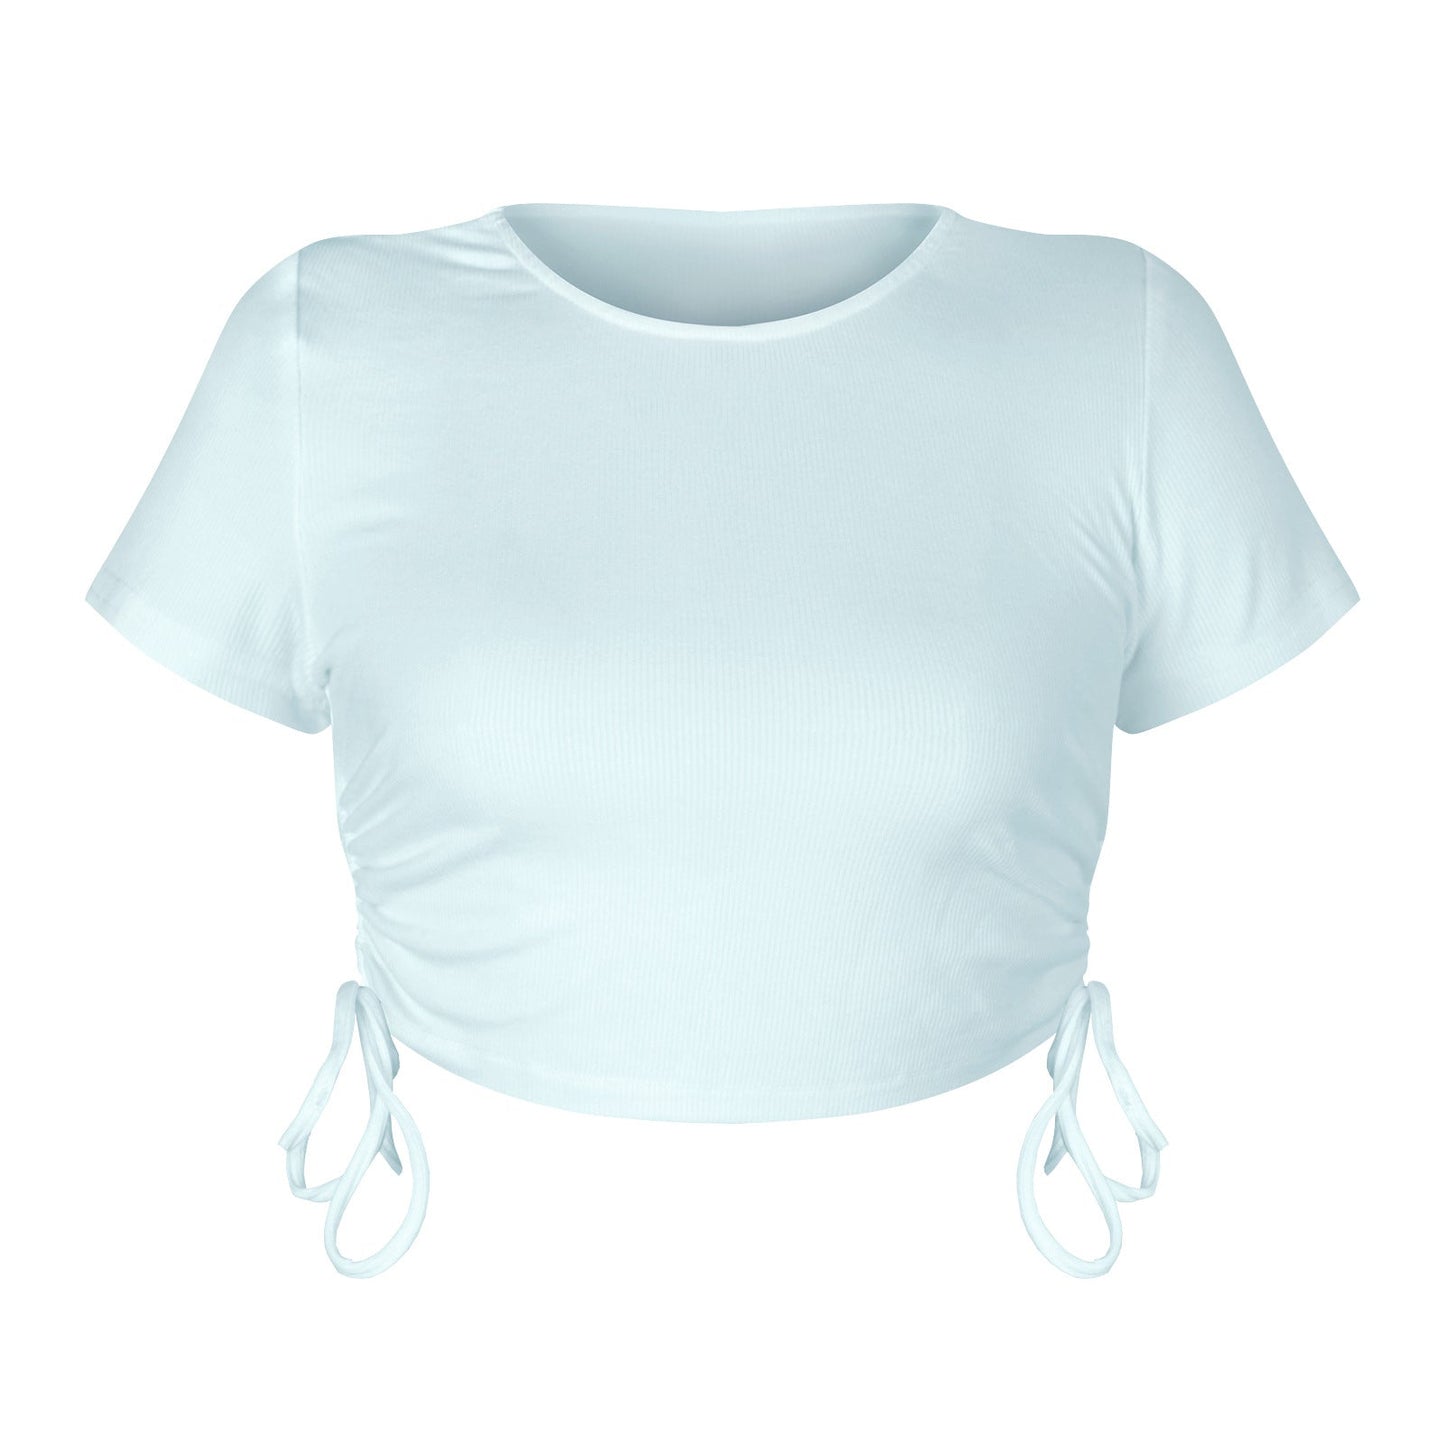 Sexy Round Neck Drawstring Midriff Baring Short Sleeves T Shirts-Shirts & Tops-GSTD004-S-Free Shipping Leatheretro